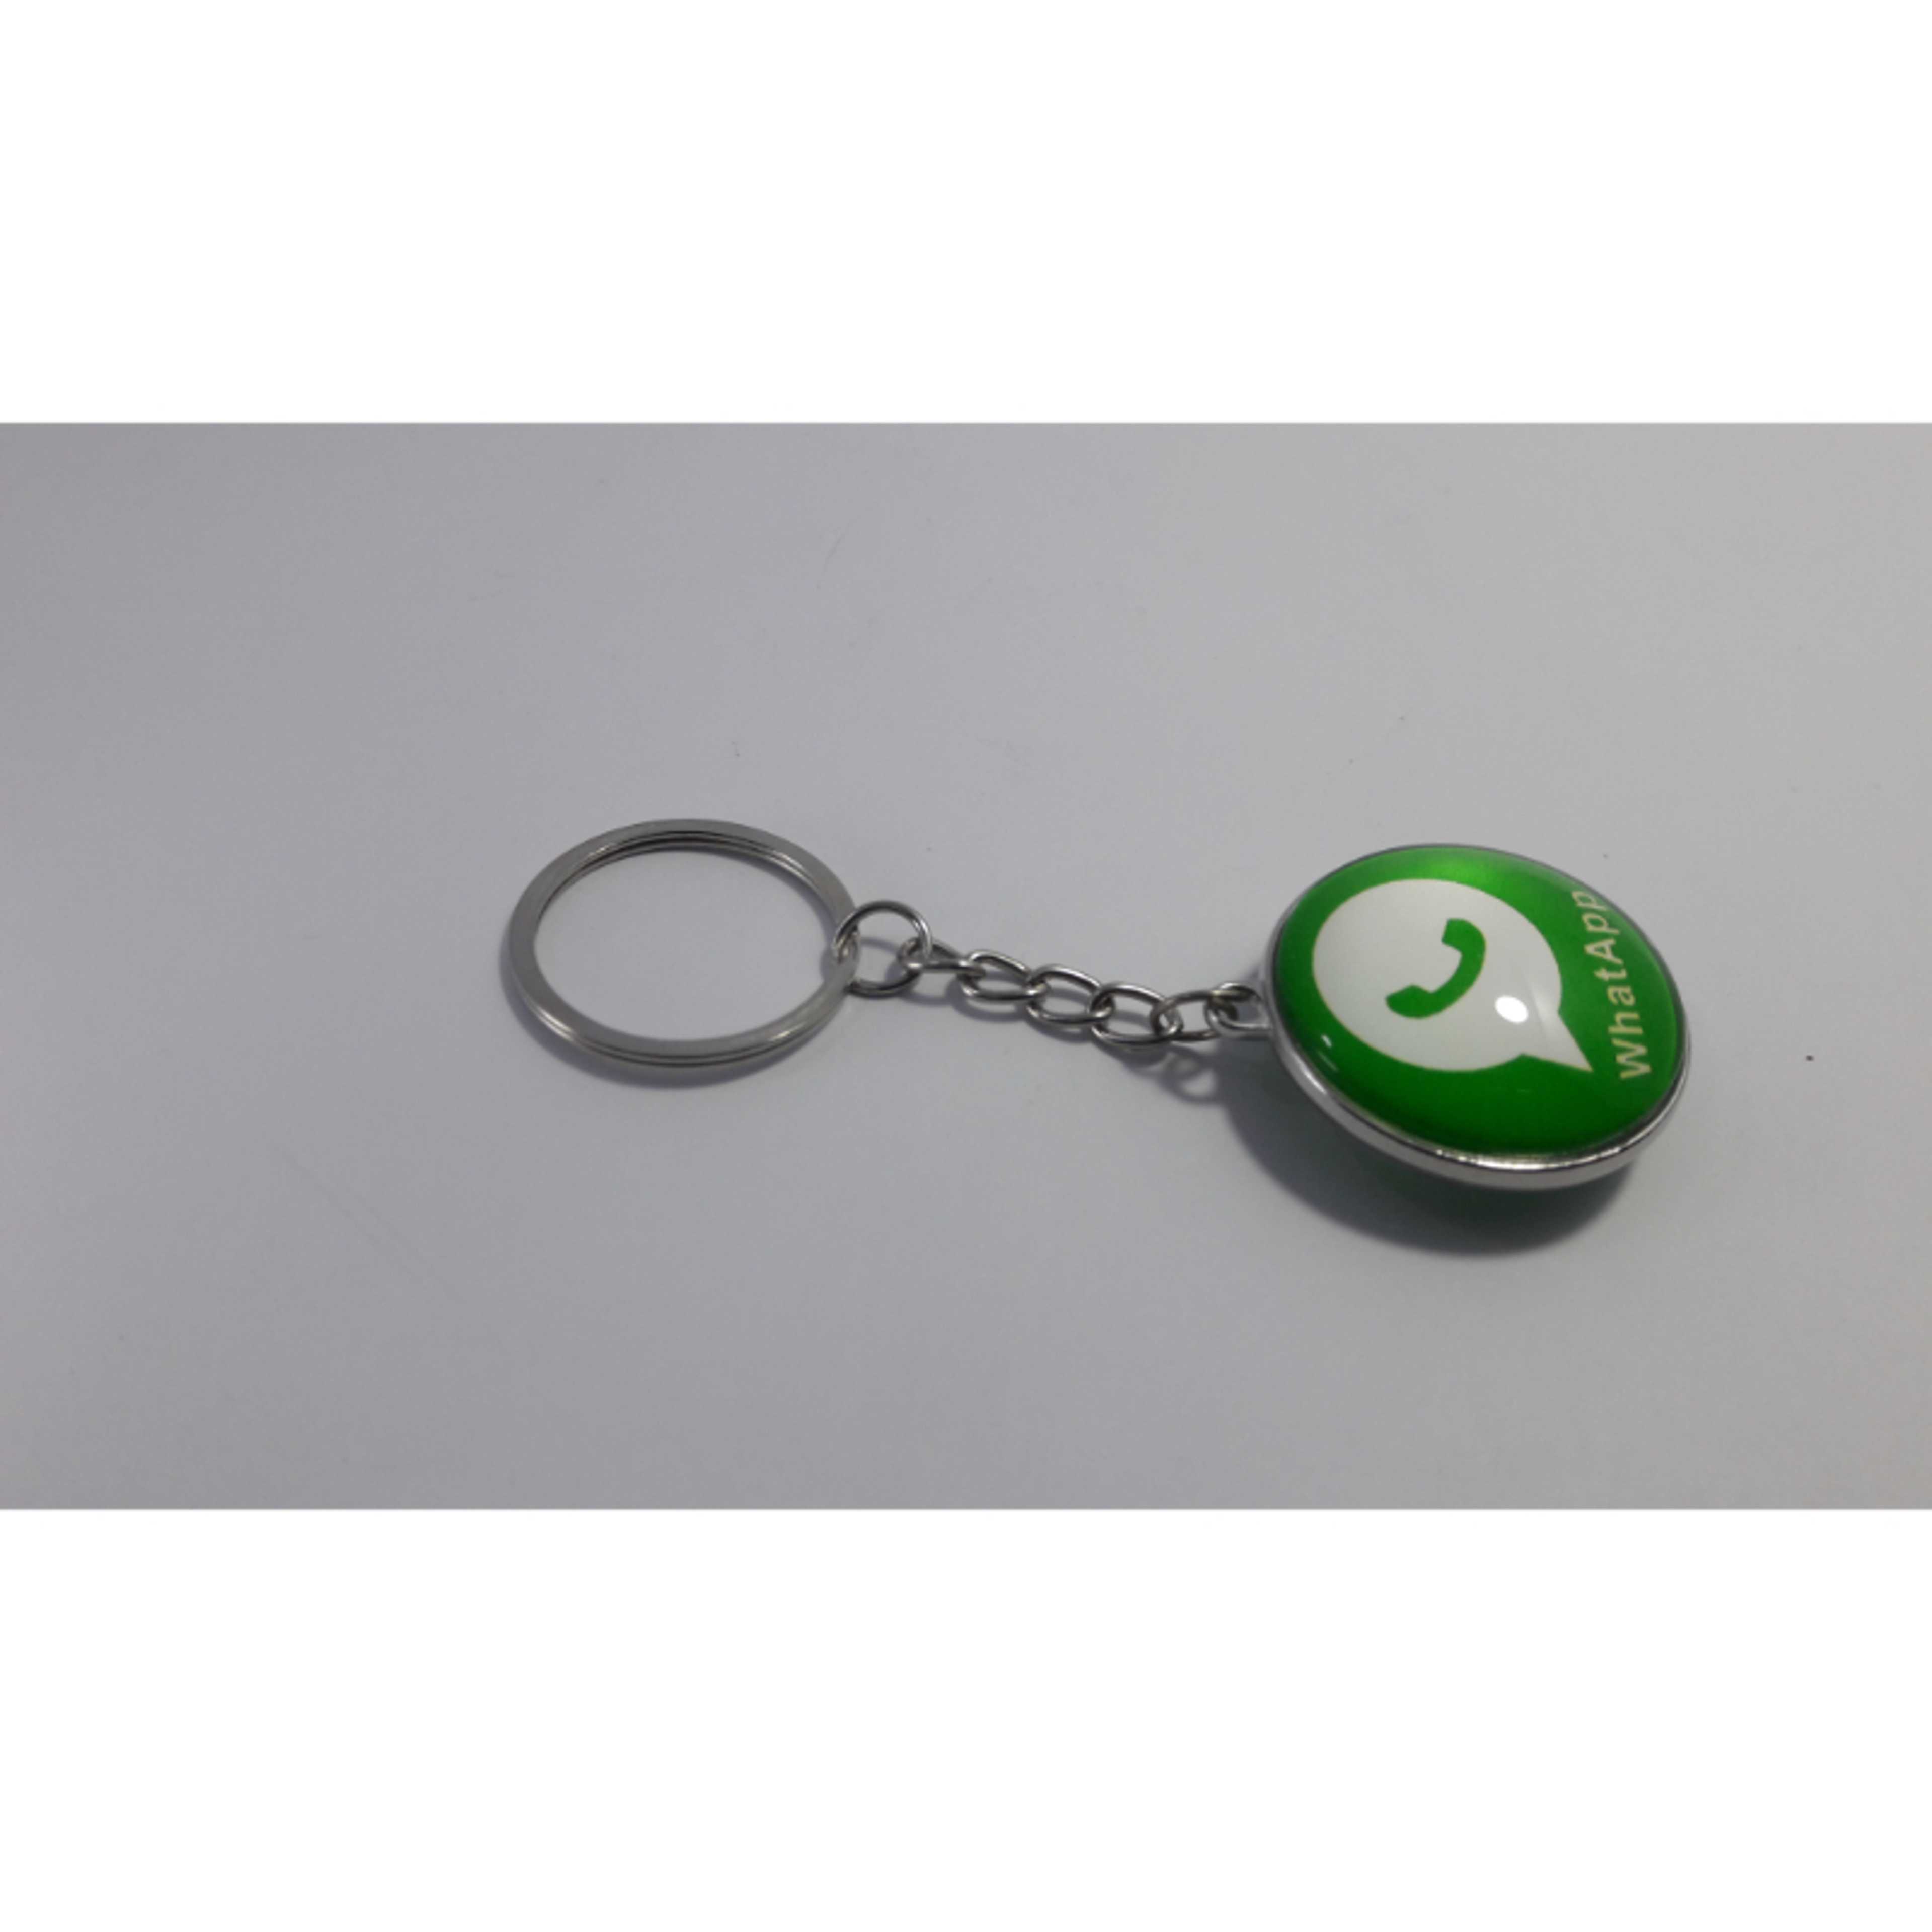 Whatapp logo key chain , steel & Glass